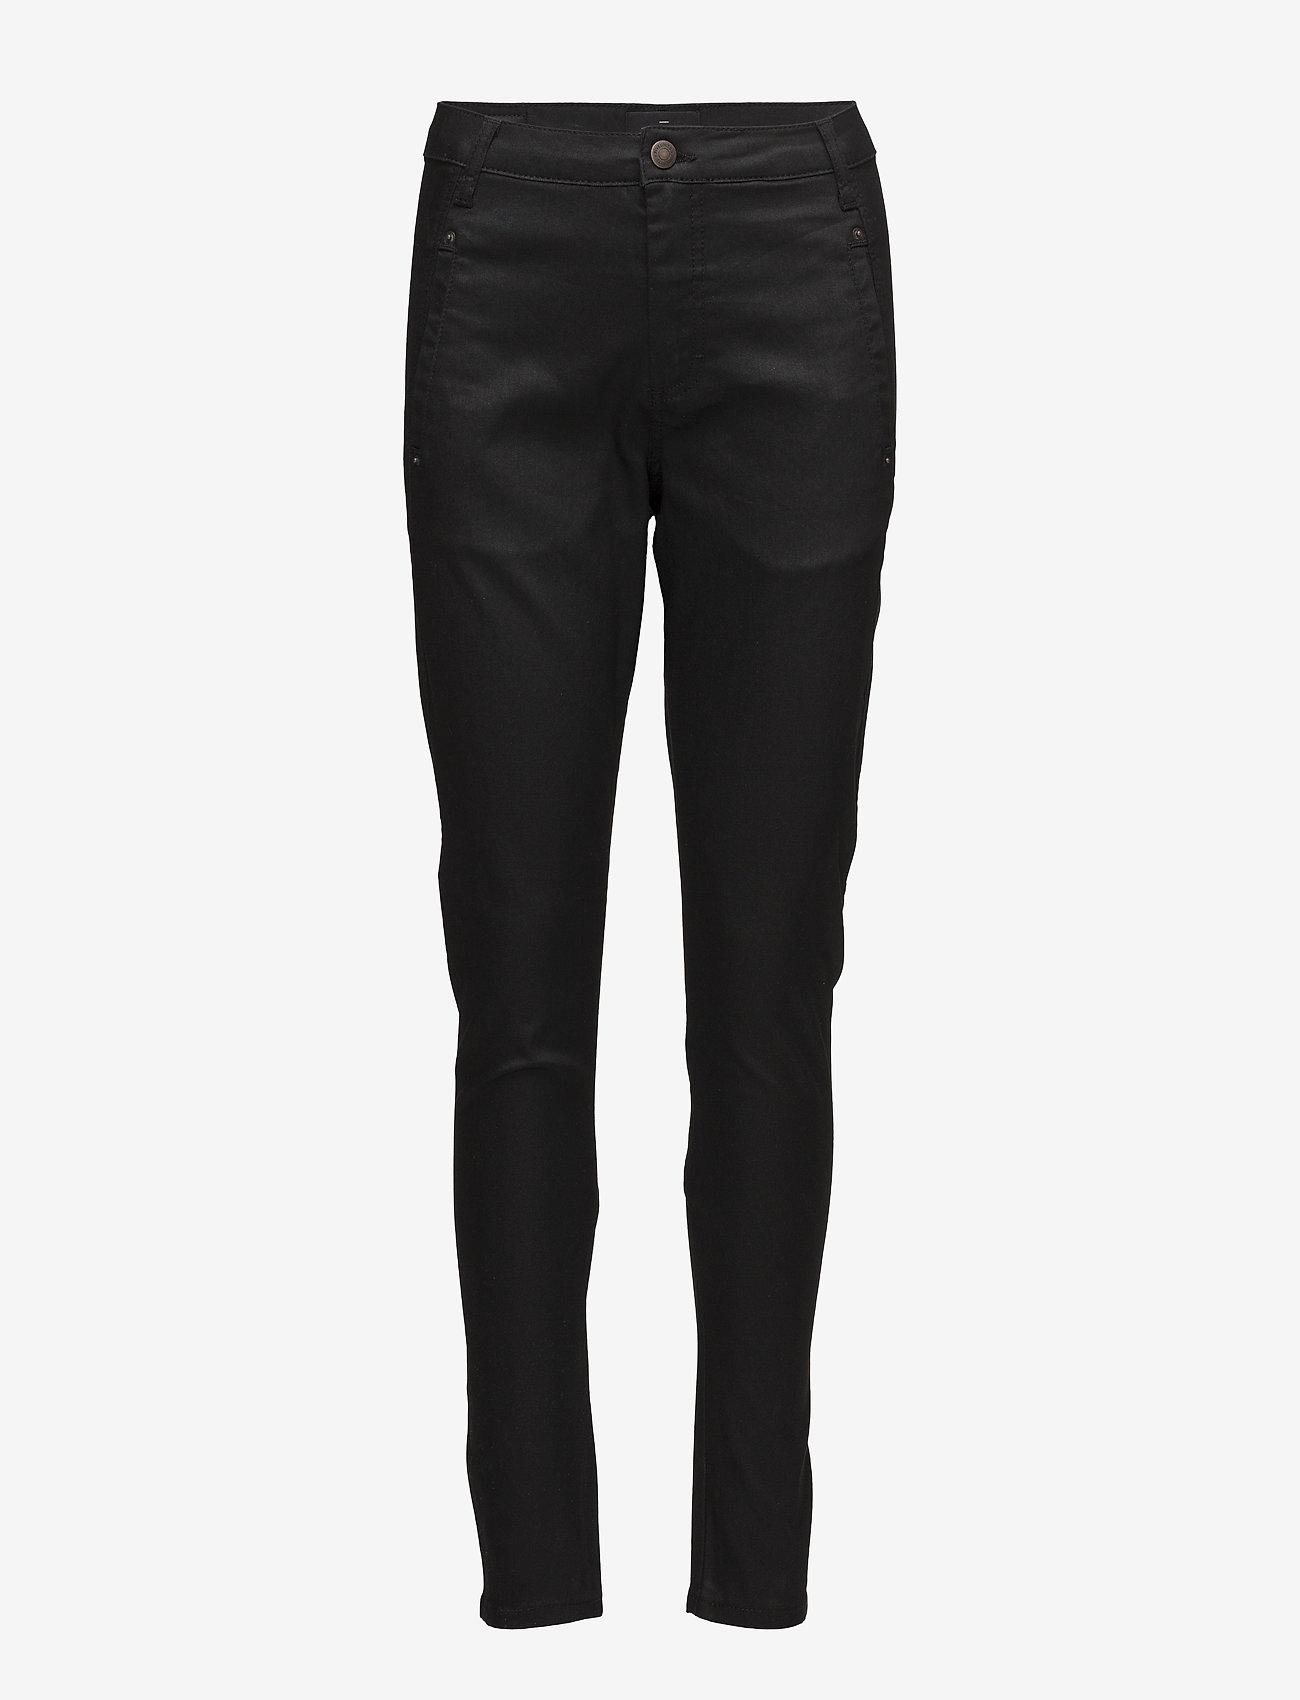 FIVEUNITS - Jolie - slim fit trousers - black coated - 0